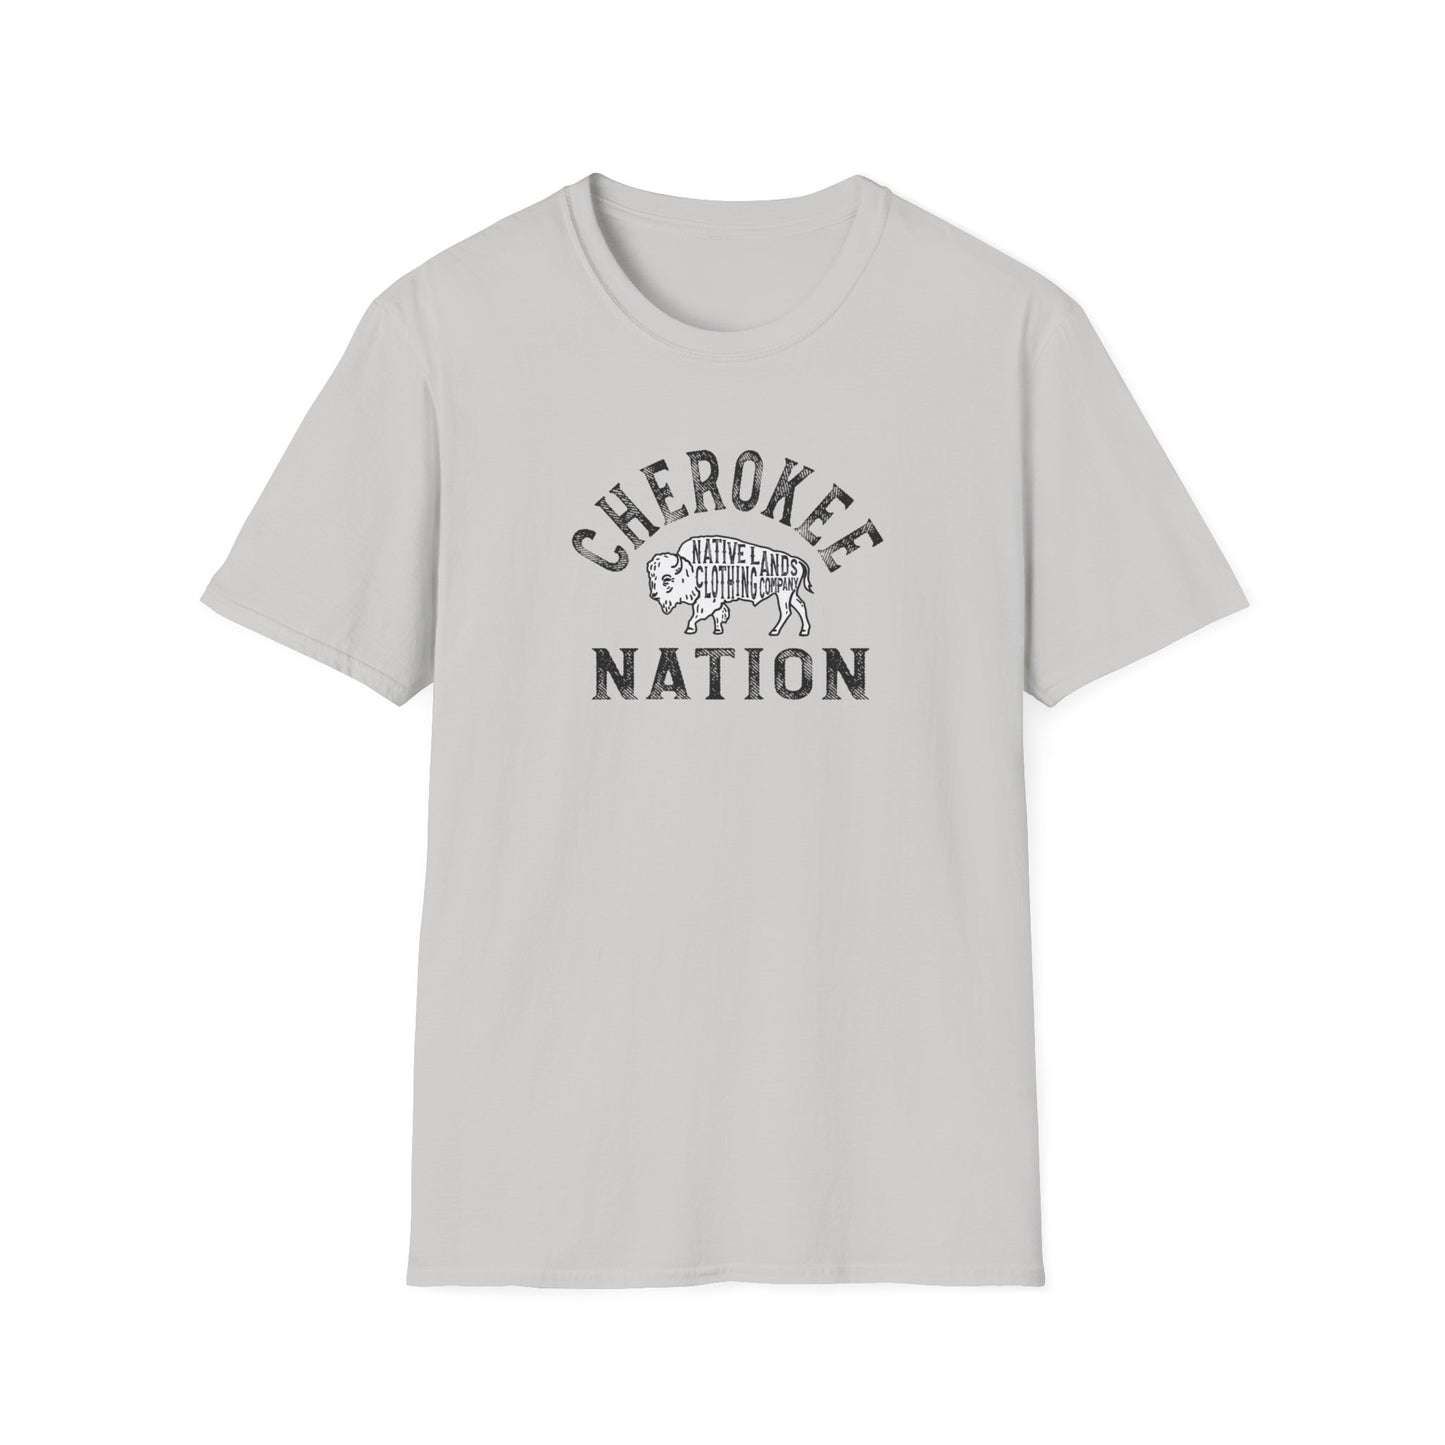 Cherokee Nation Shirt Cotton Native American